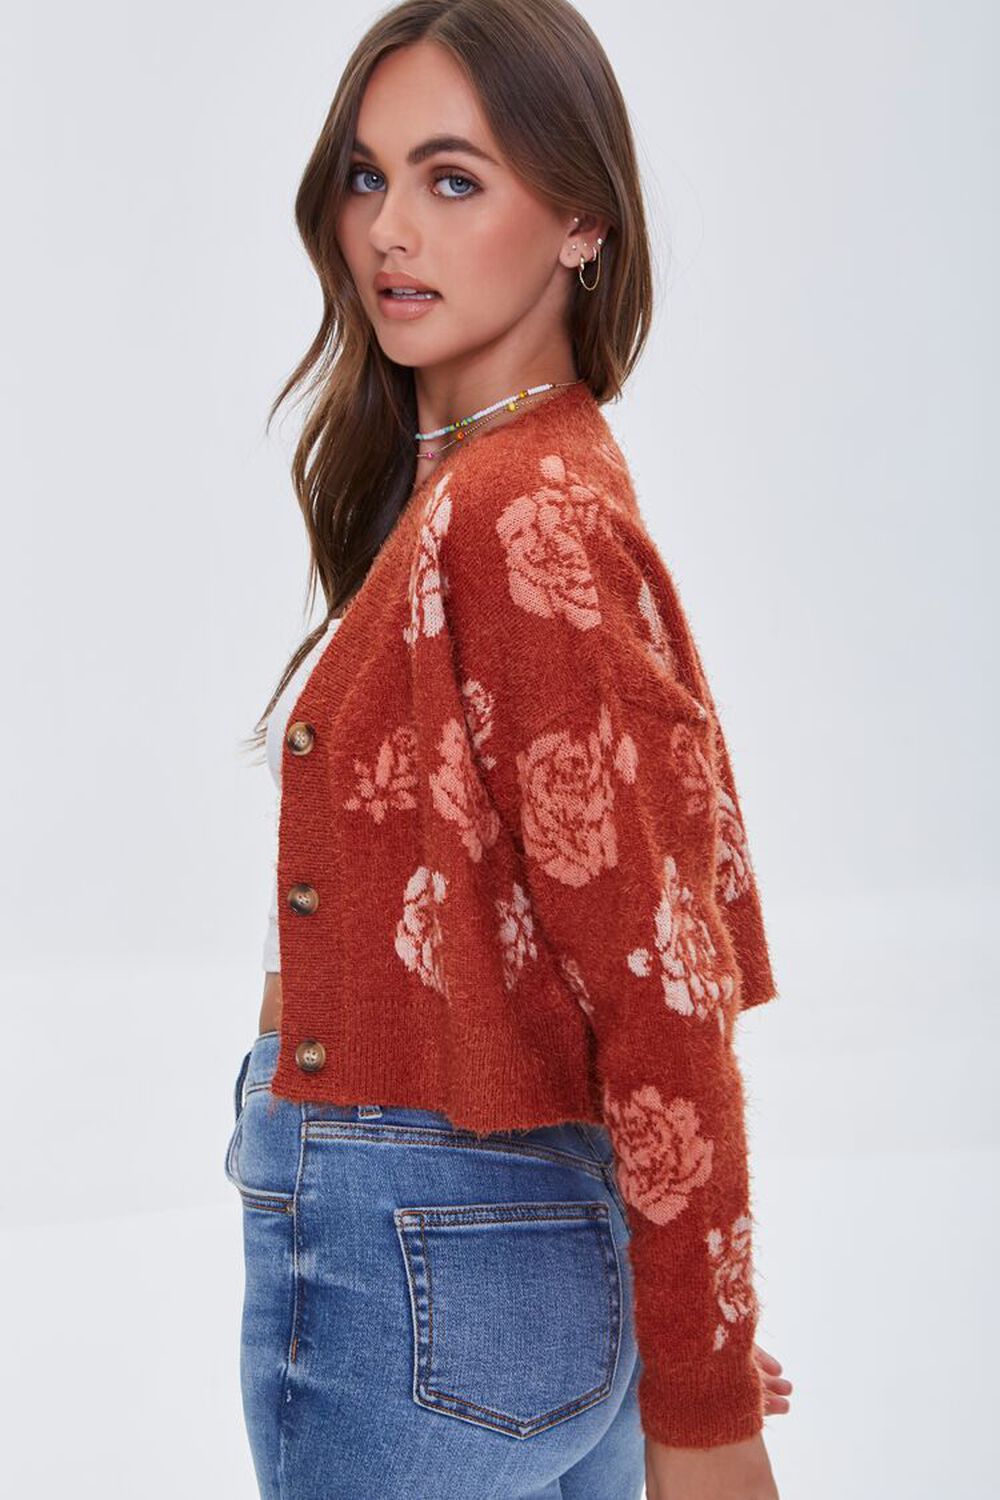 RUST/MULTI Rose Fuzzy Cardigan Sweater, image 2